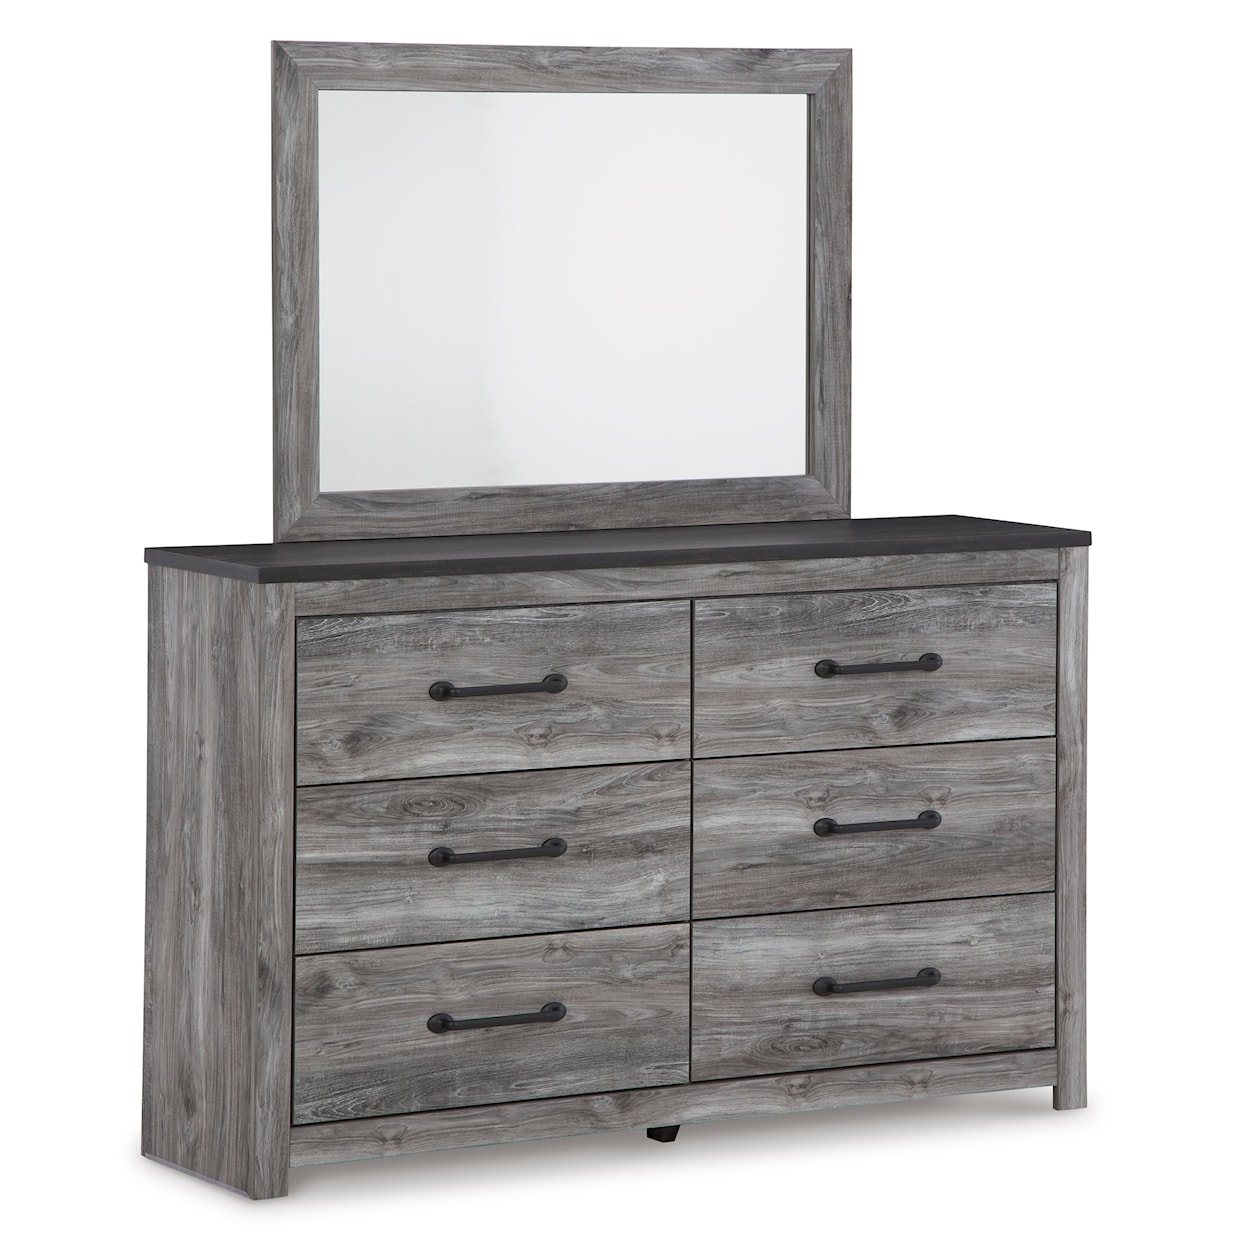 Ashley Furniture Signature Design Bronyan Dresser and Mirror